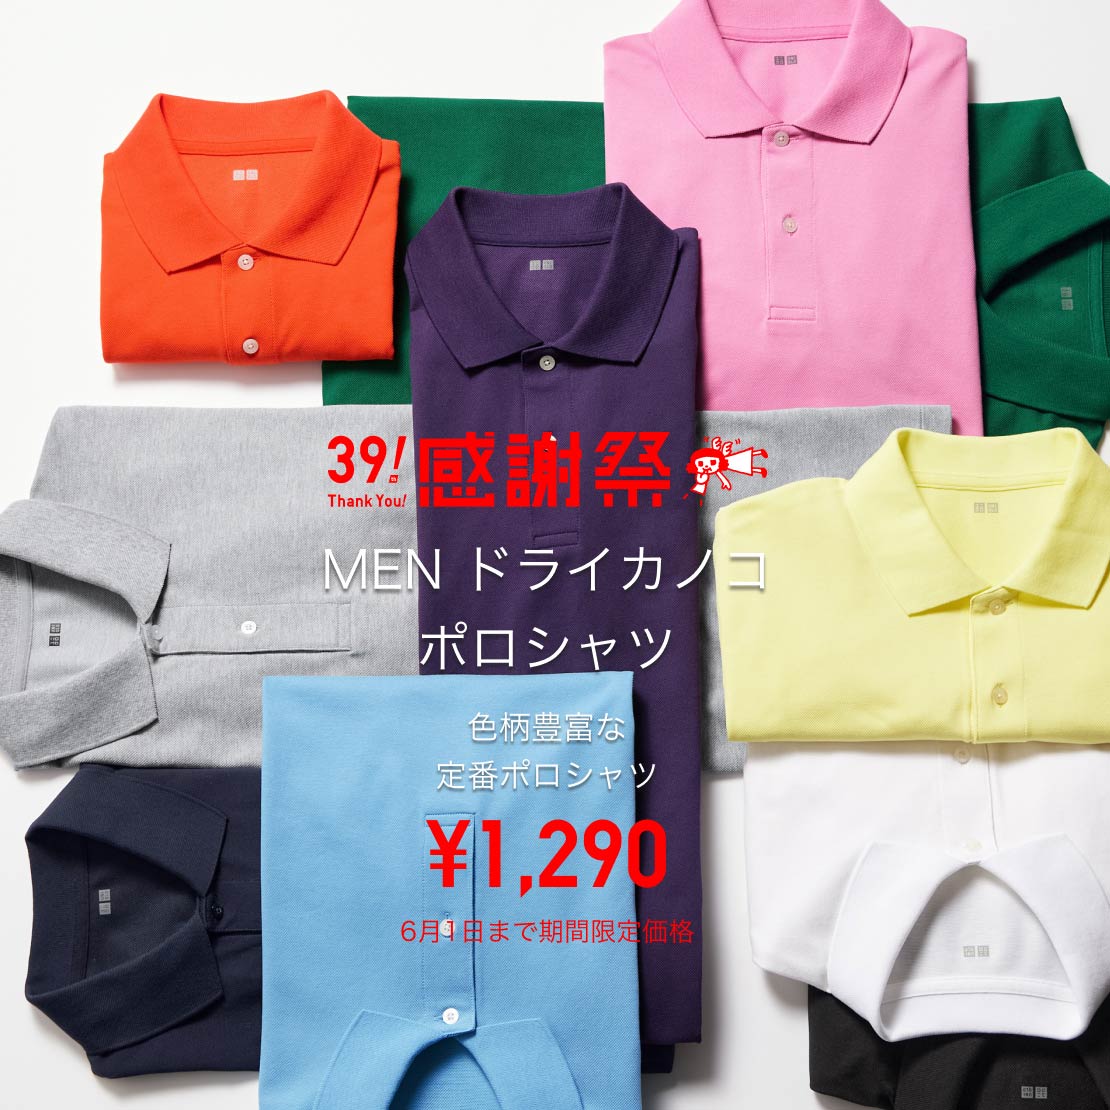 MEN ドライカノコポロシャツ ¥1,290 6月1日まで期間限定価格